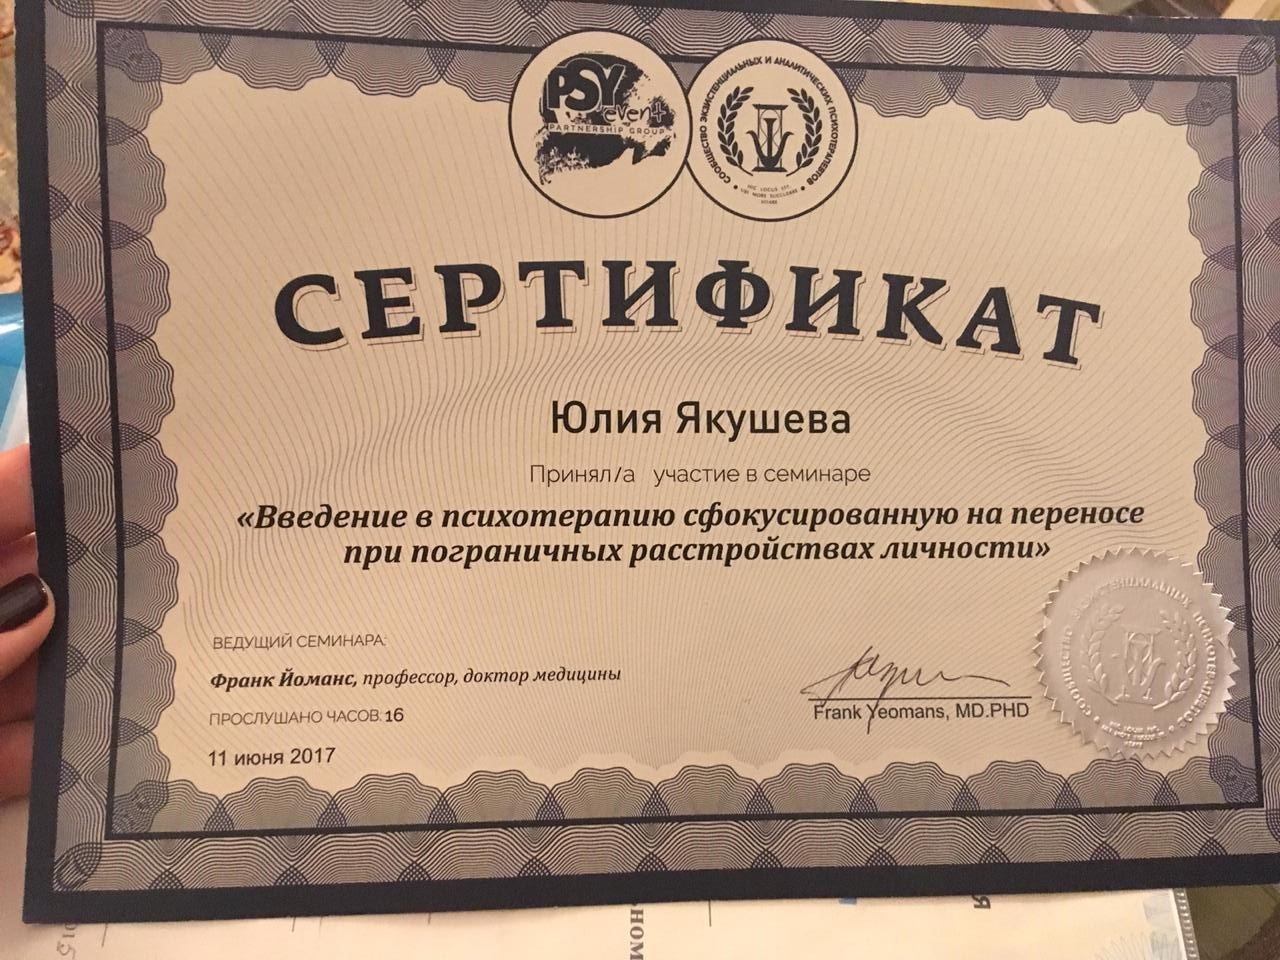 Якушева сертификат.jpg